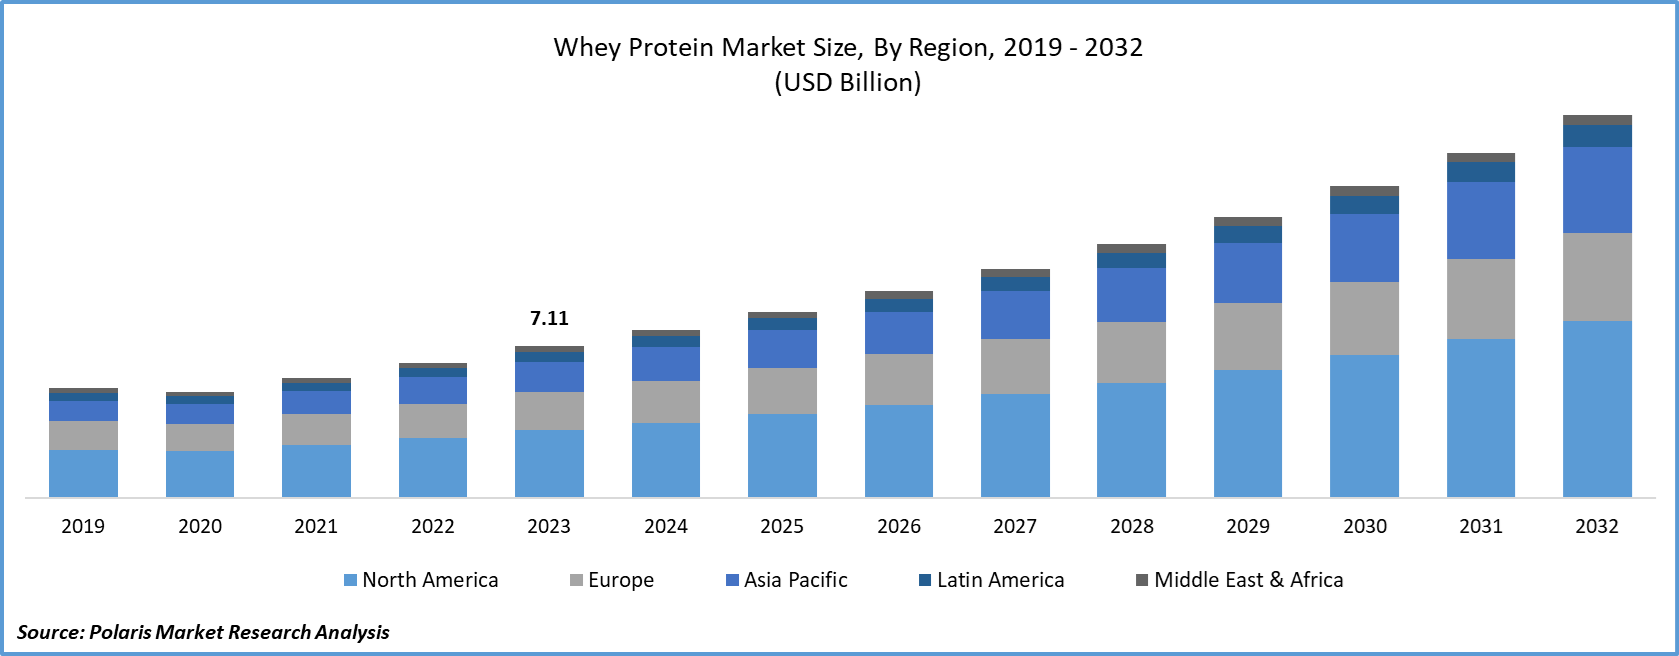 Whey Protein Market Size